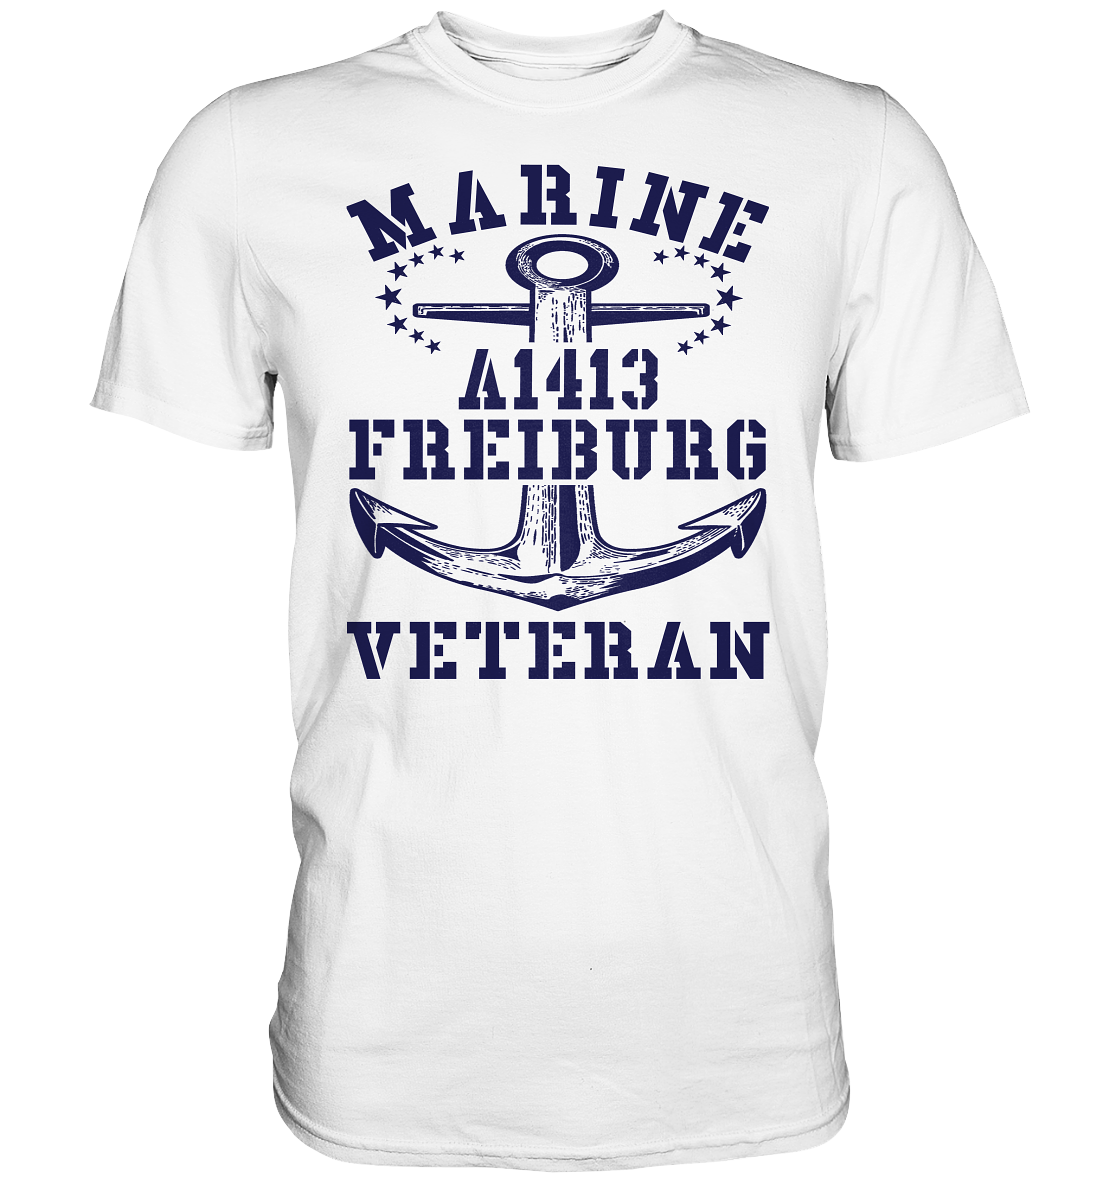 Troßschiff A1413 FREIBURG Marine Veteran - Premium Shirt